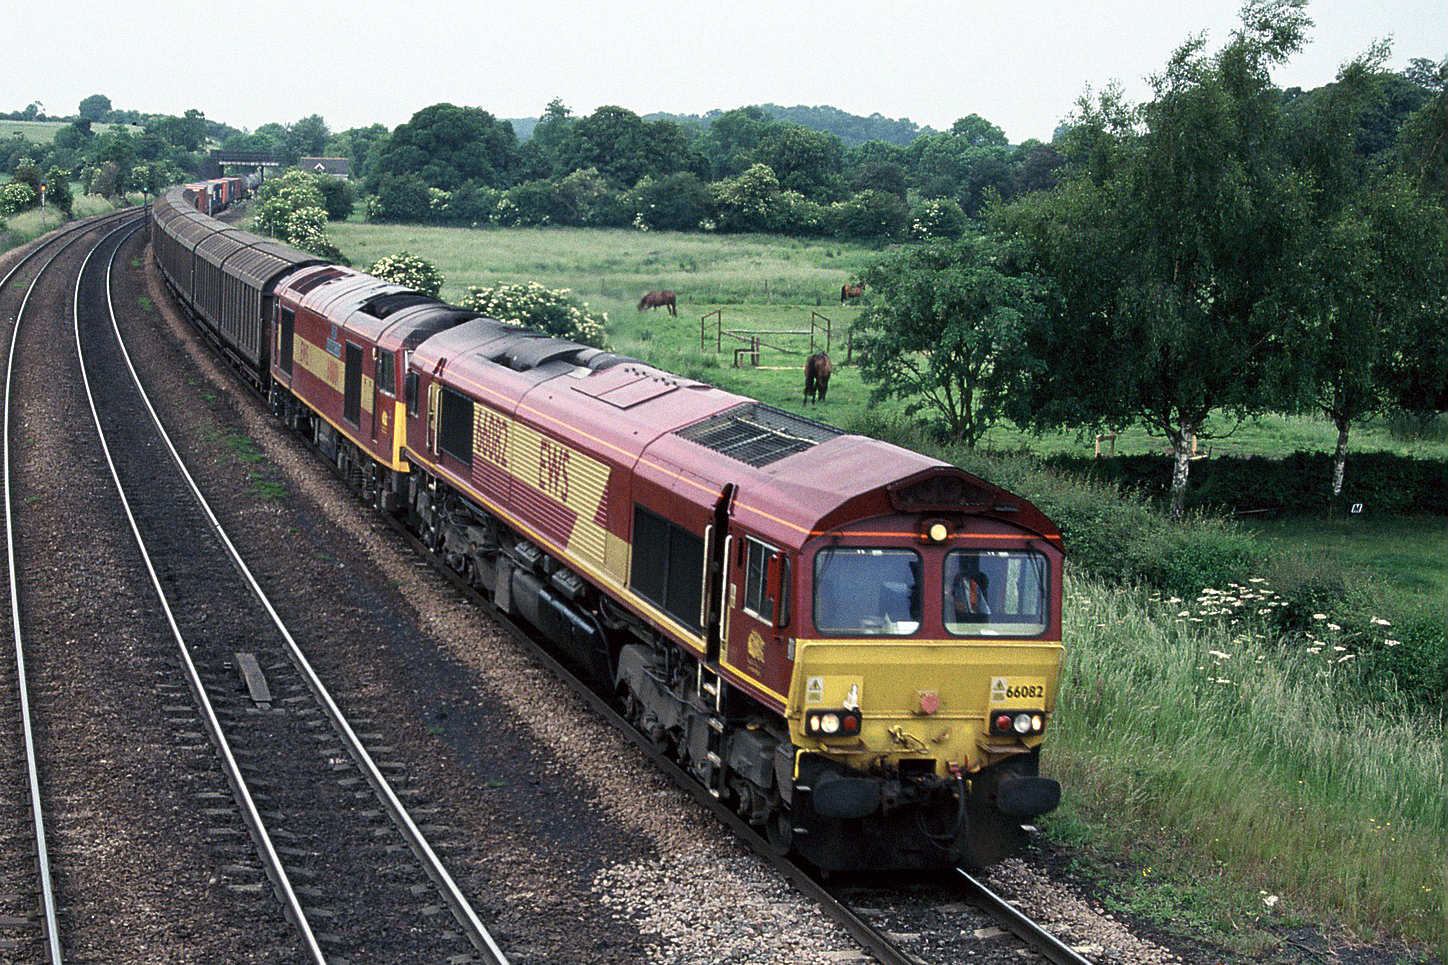 66082, with 60001 DIT, through Melton Ross on 6D65 Doncaster Belmont yard to Immingham Enterprise, 18th June 2005. Bob Wallen